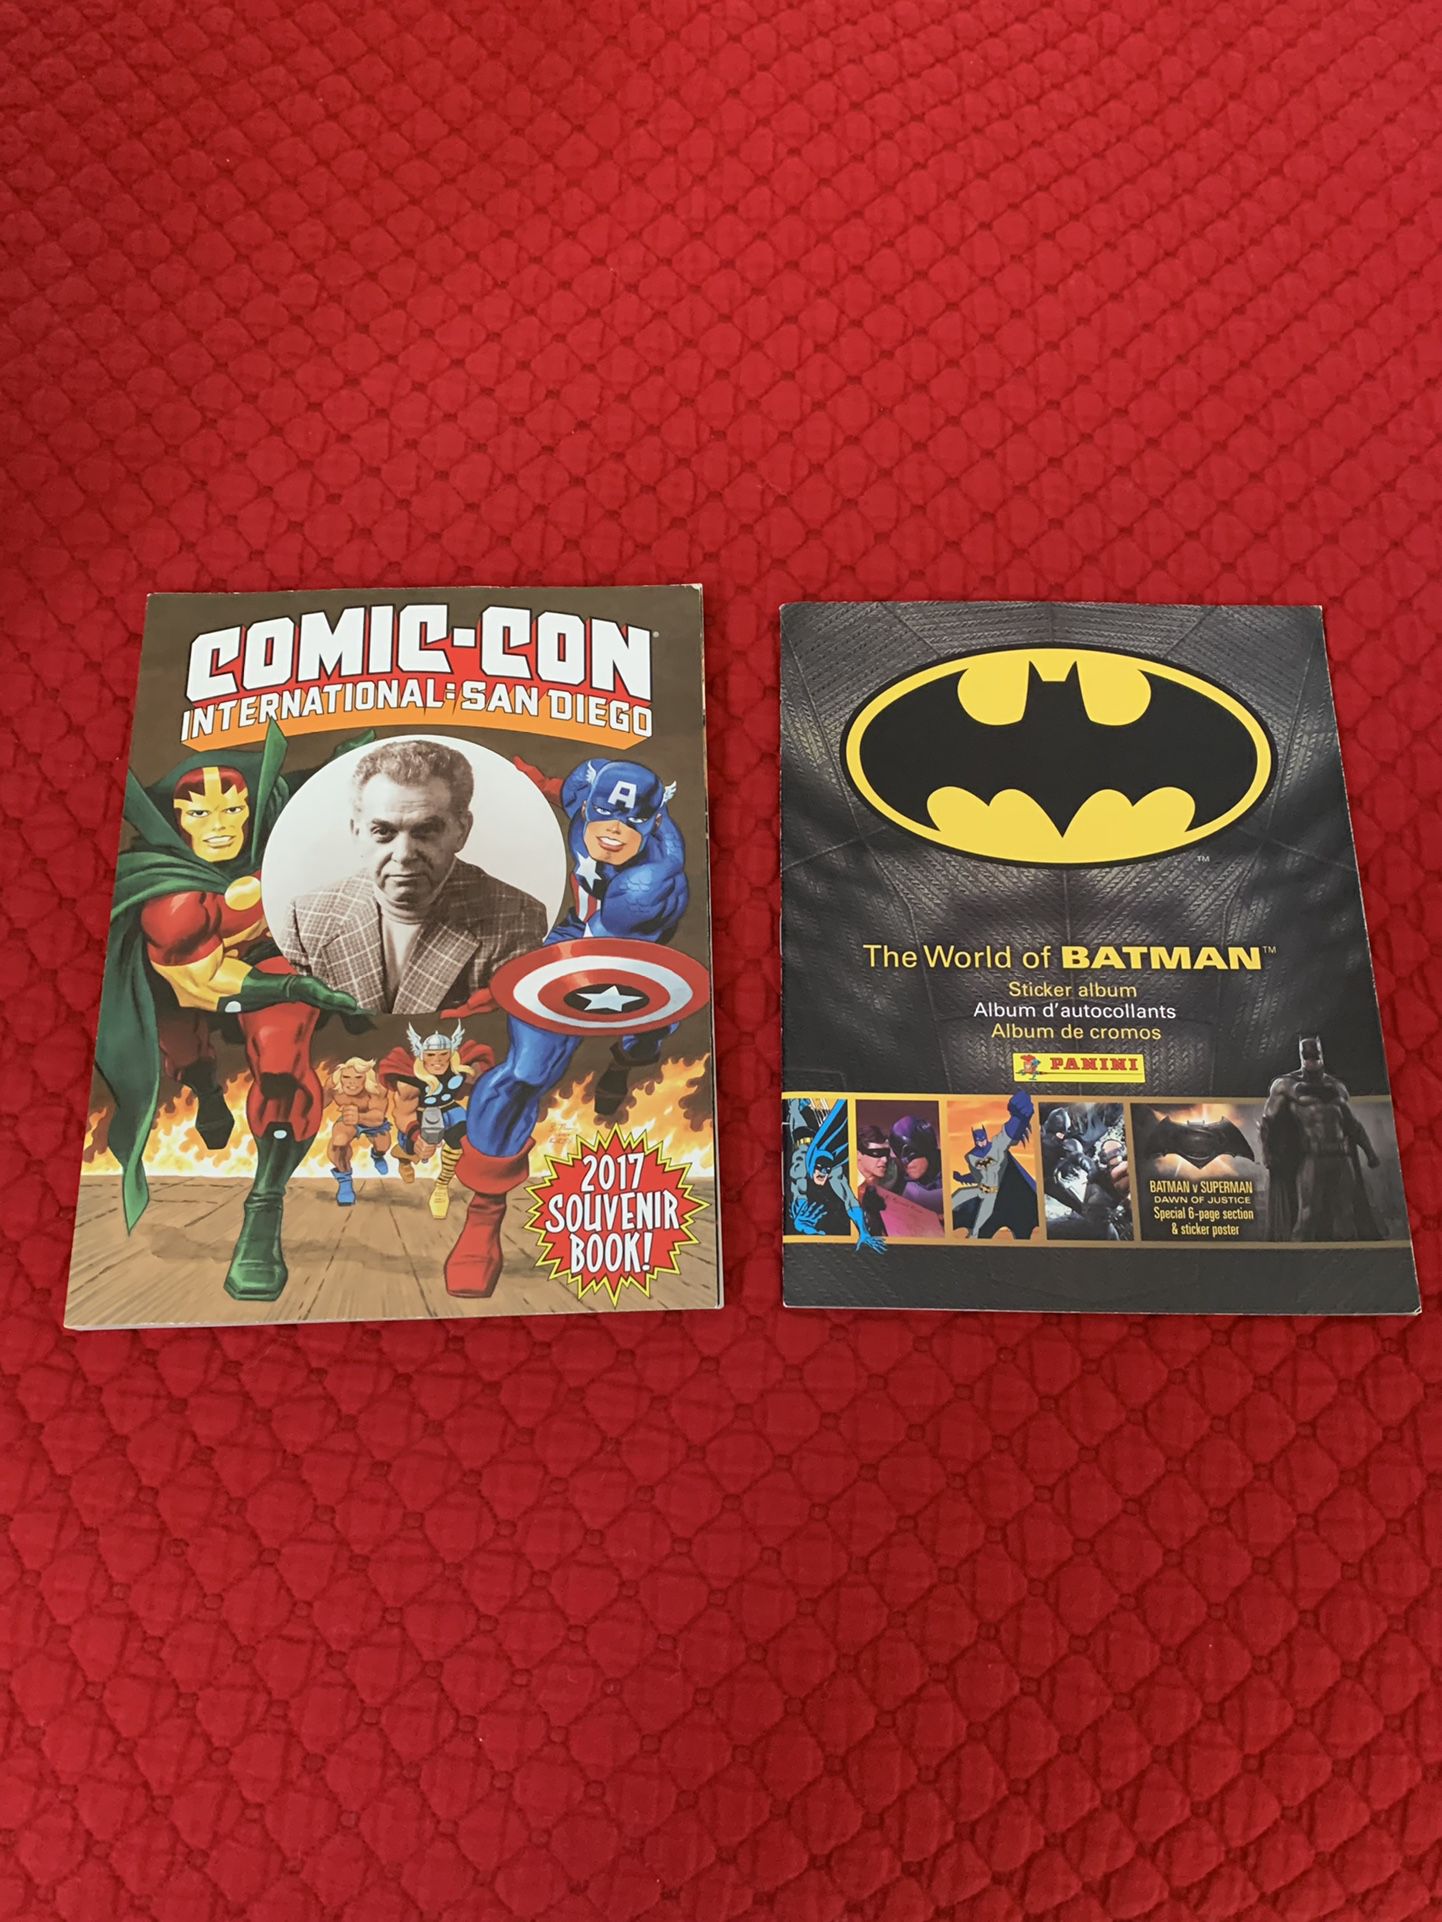 Comic Con 2017 San Diego Souvenir Book With Batman